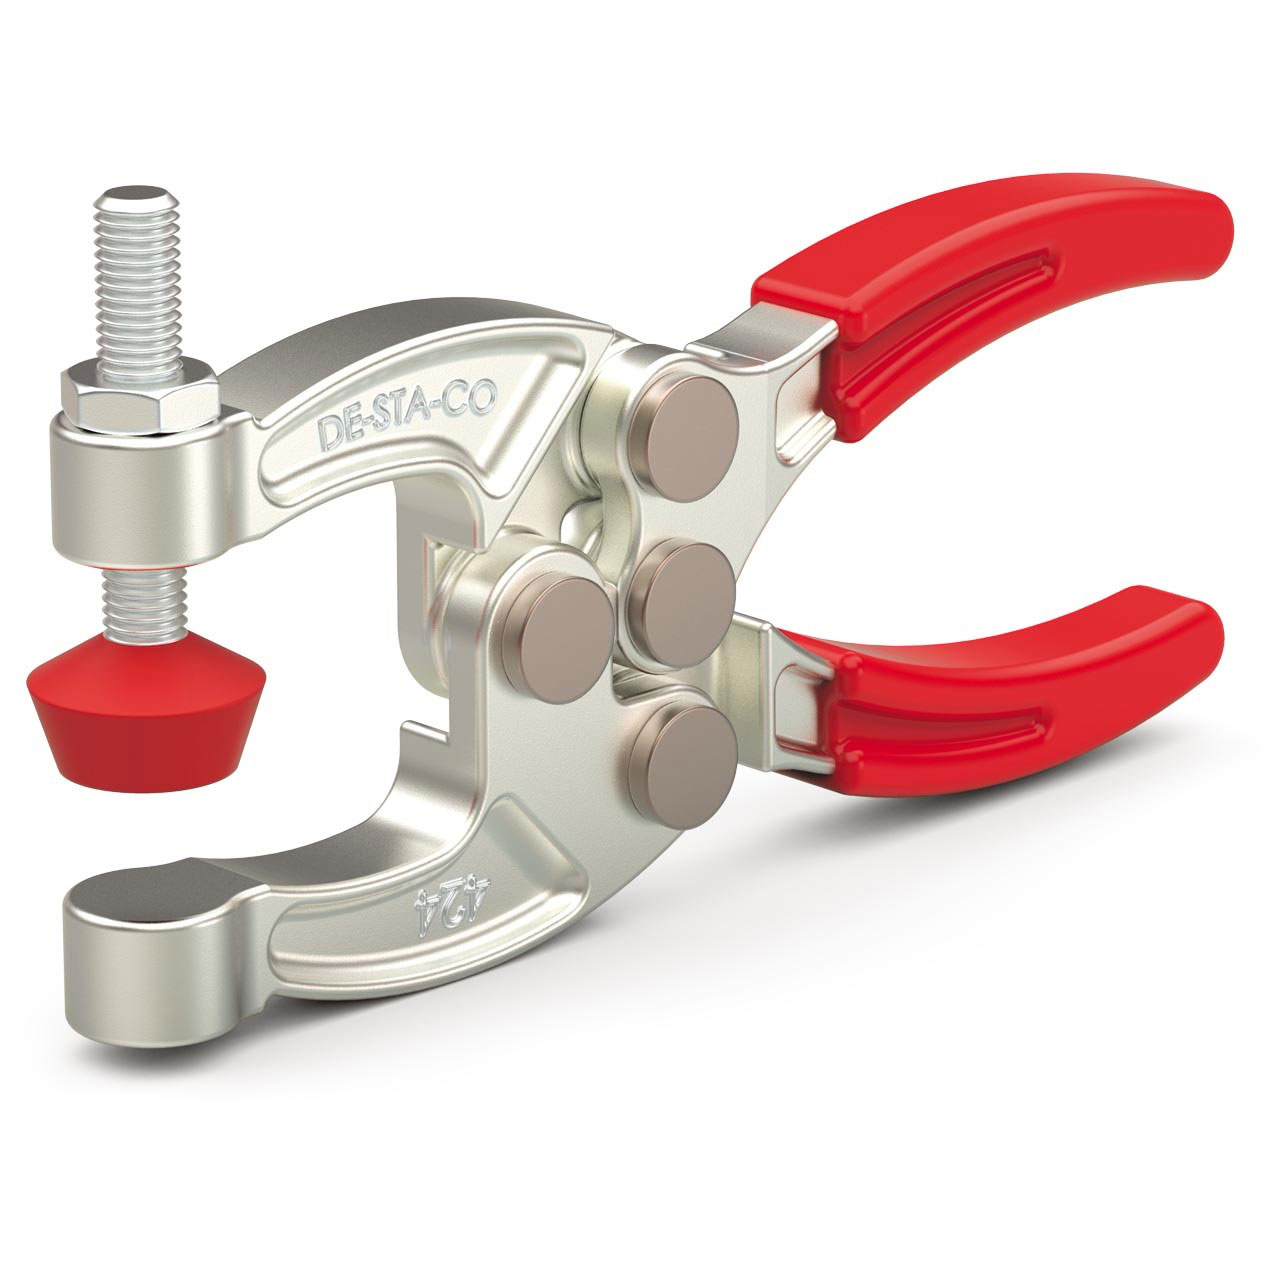 Destaco squeeze action clamps 424-441 series